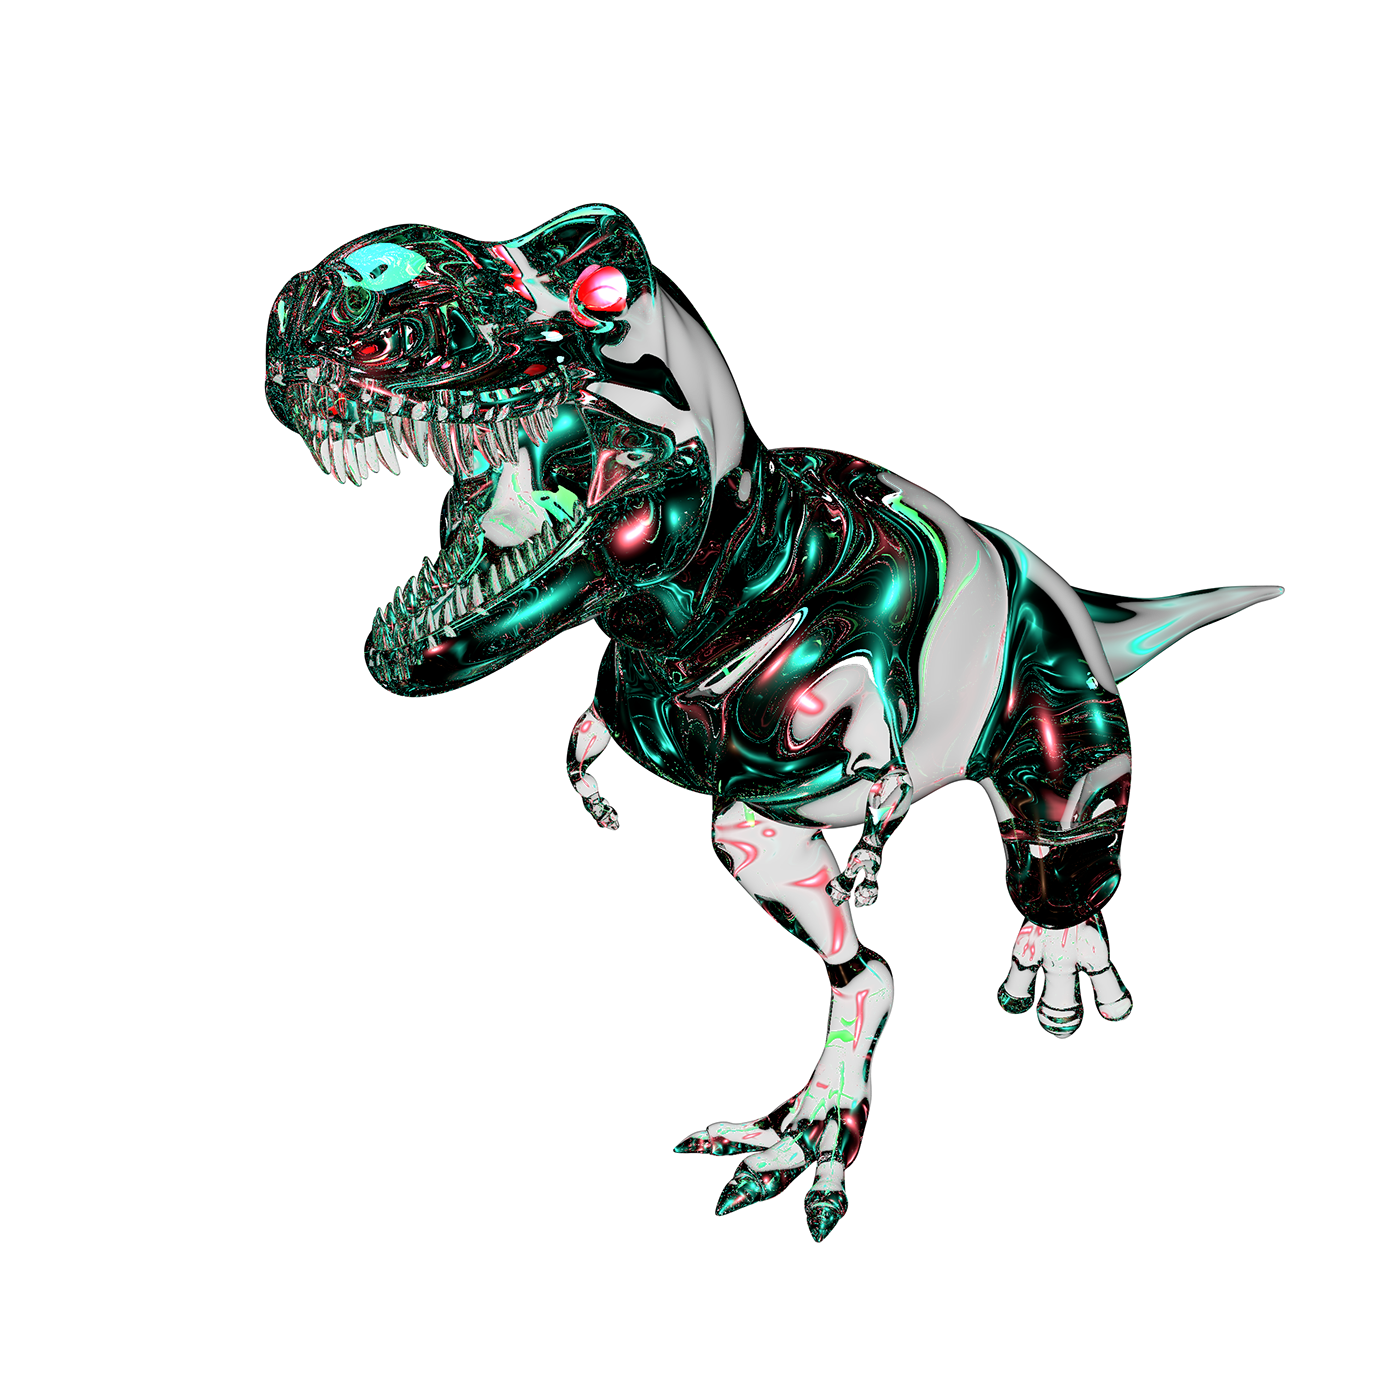 3D digital art visual colorful vaporwave graphic